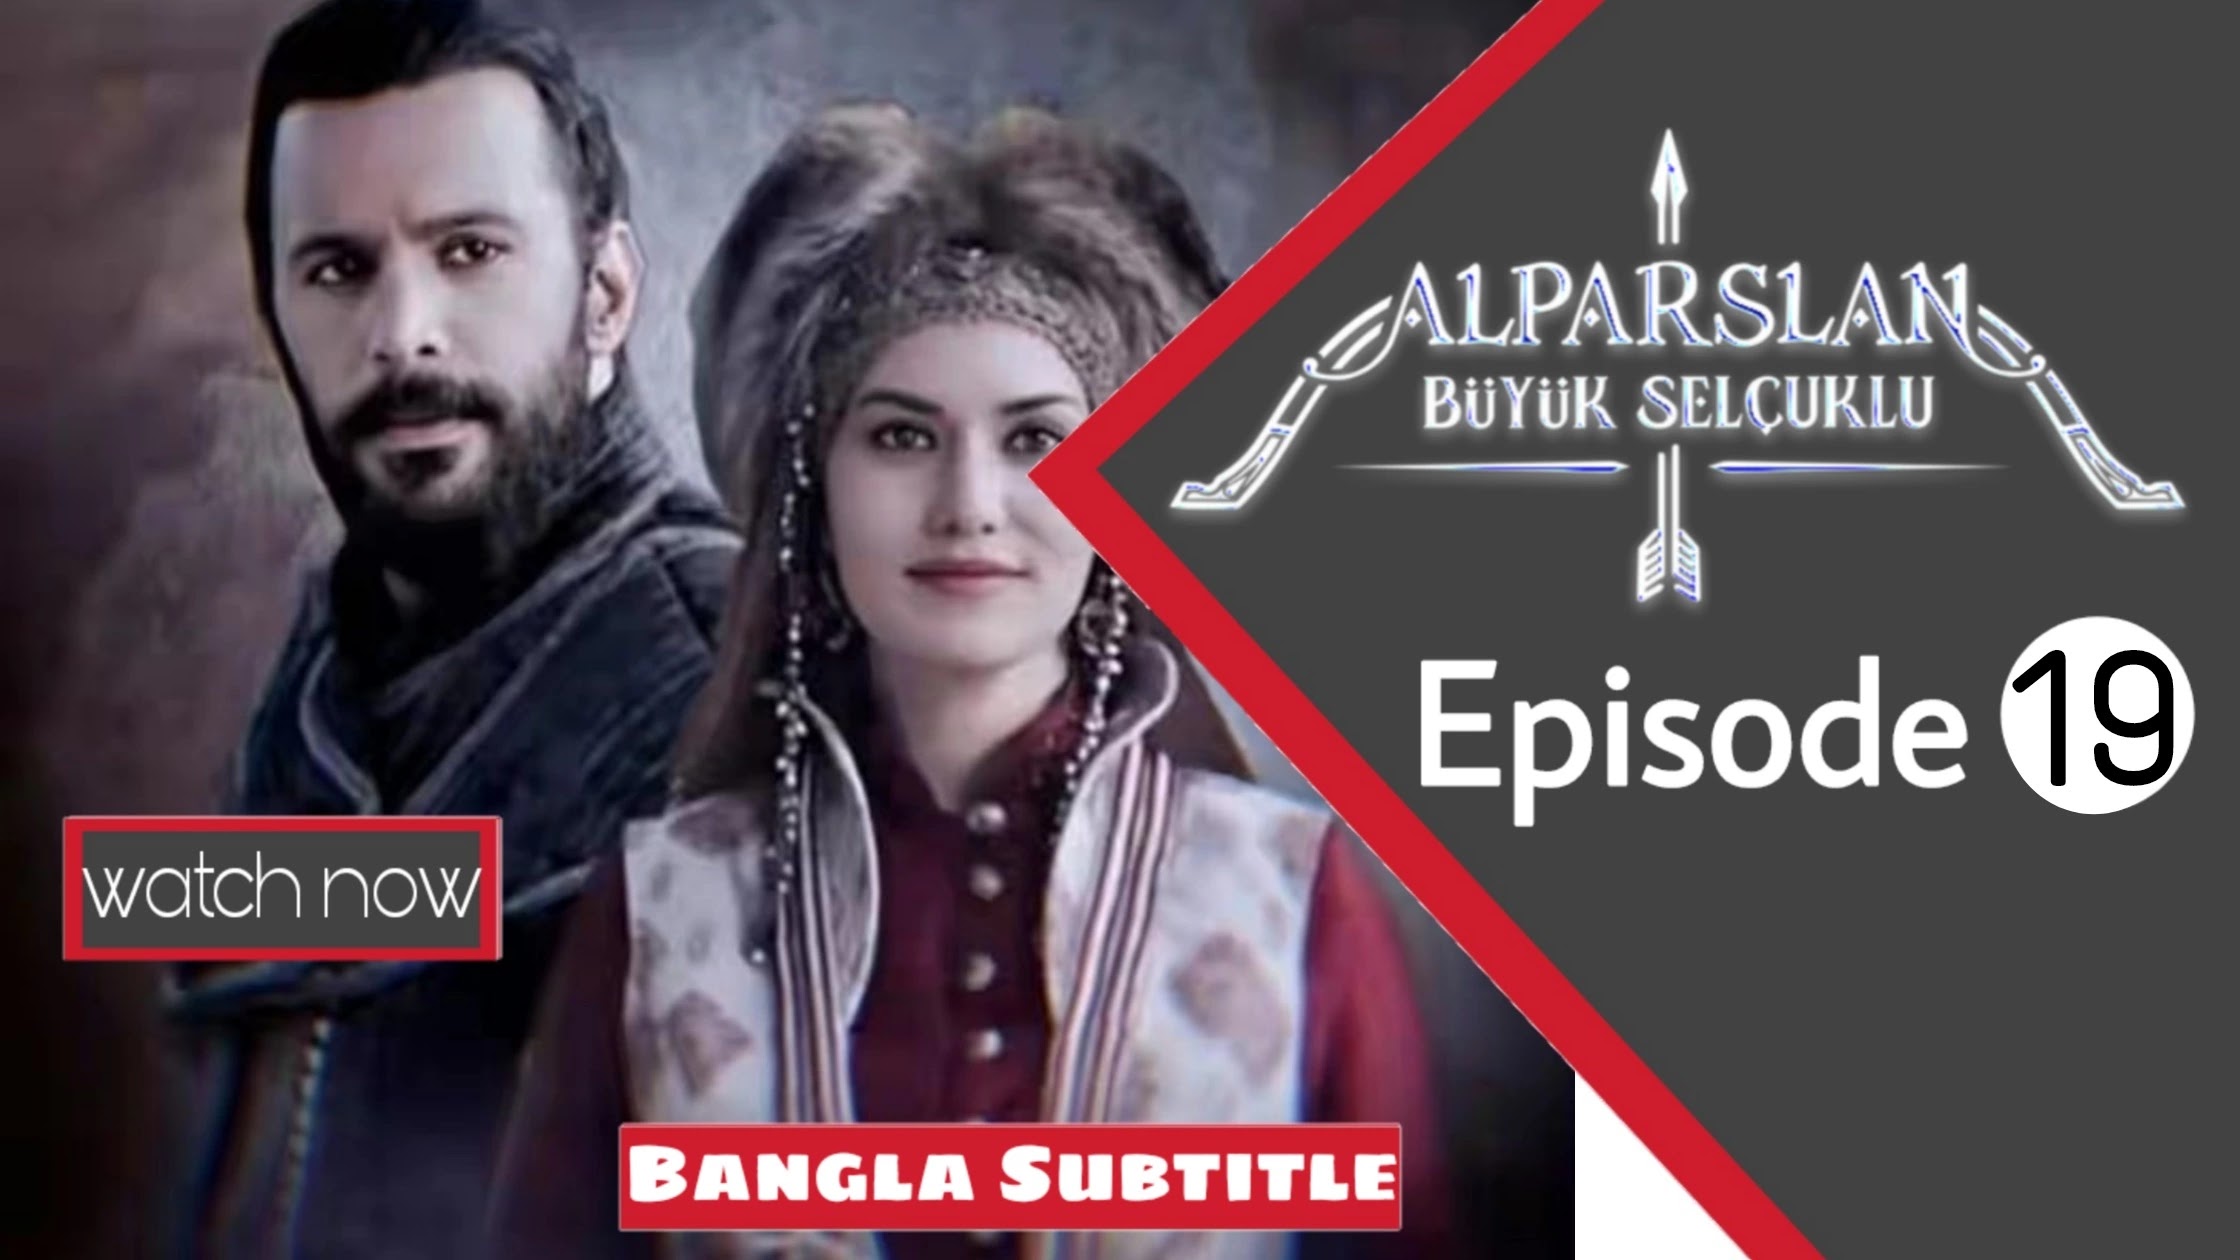 Alparslan Buyuk Selcuklu Episode 19 Bangla Subtitle